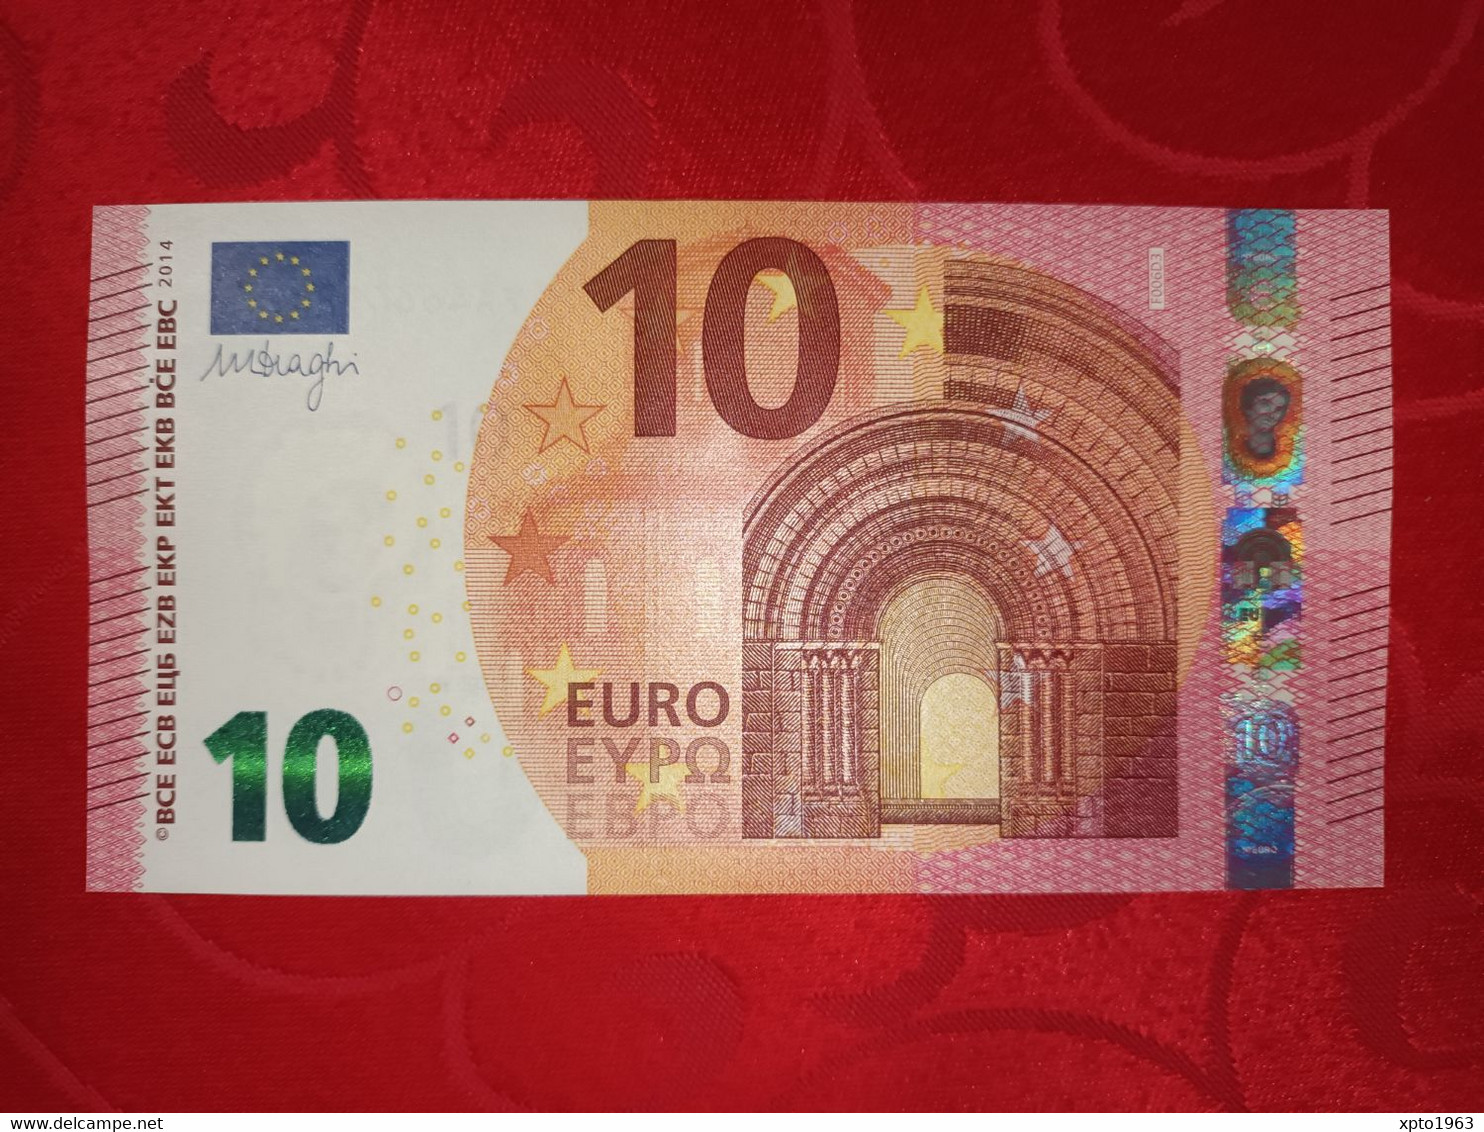 Buy 10 Euro Bills